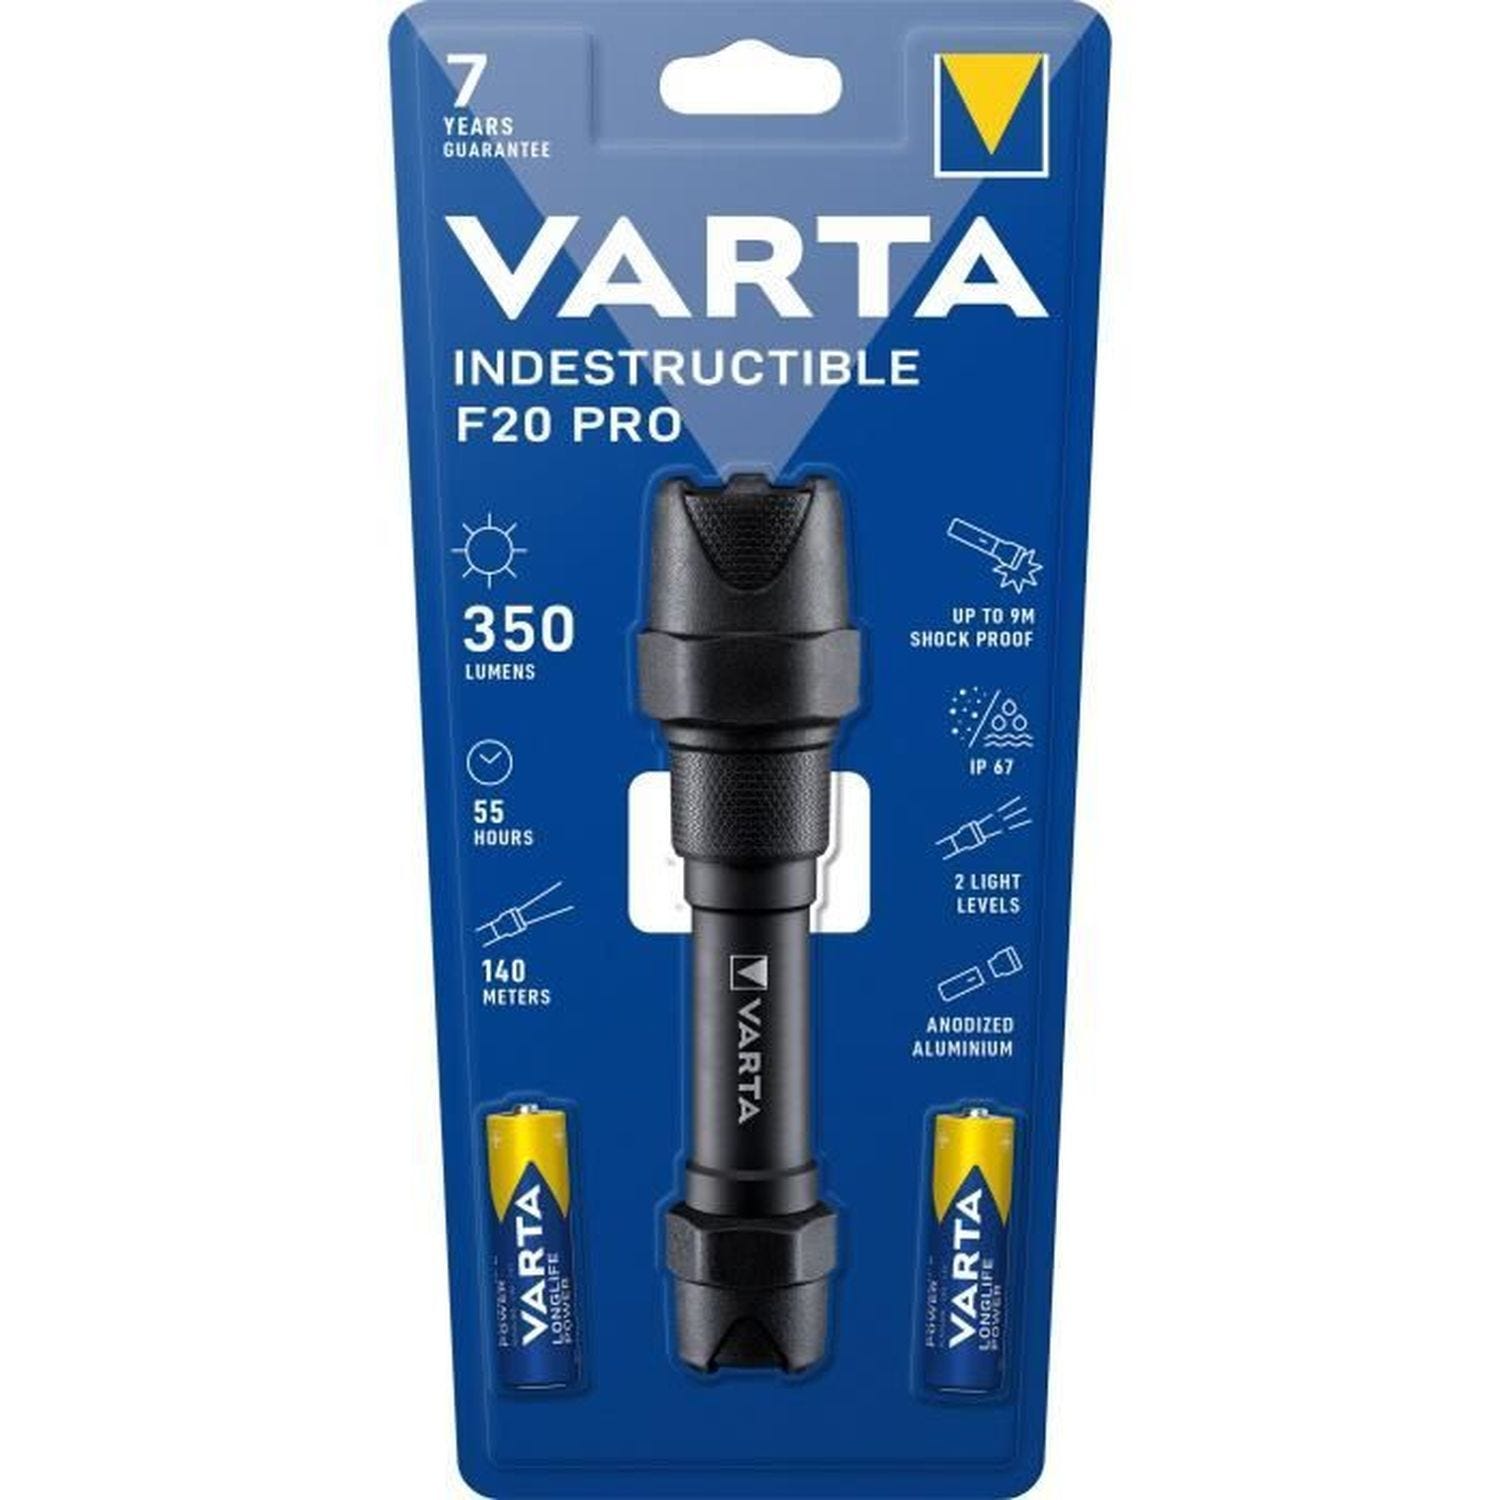 Torche-VARTA-Indestructible F20 Pro-350 lm - VARTA 0